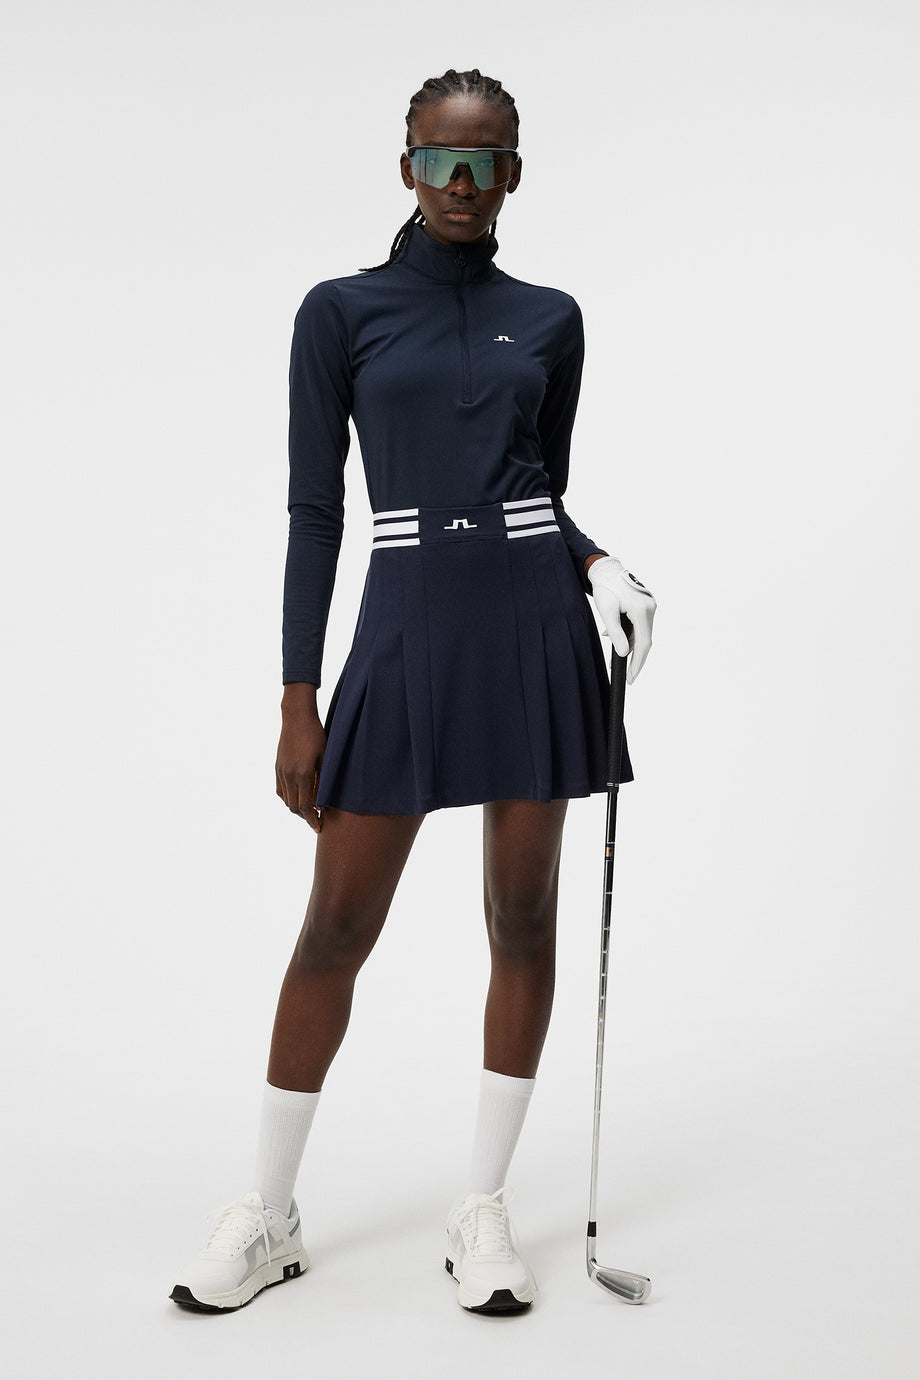 Harlow Skirt / JL Navy